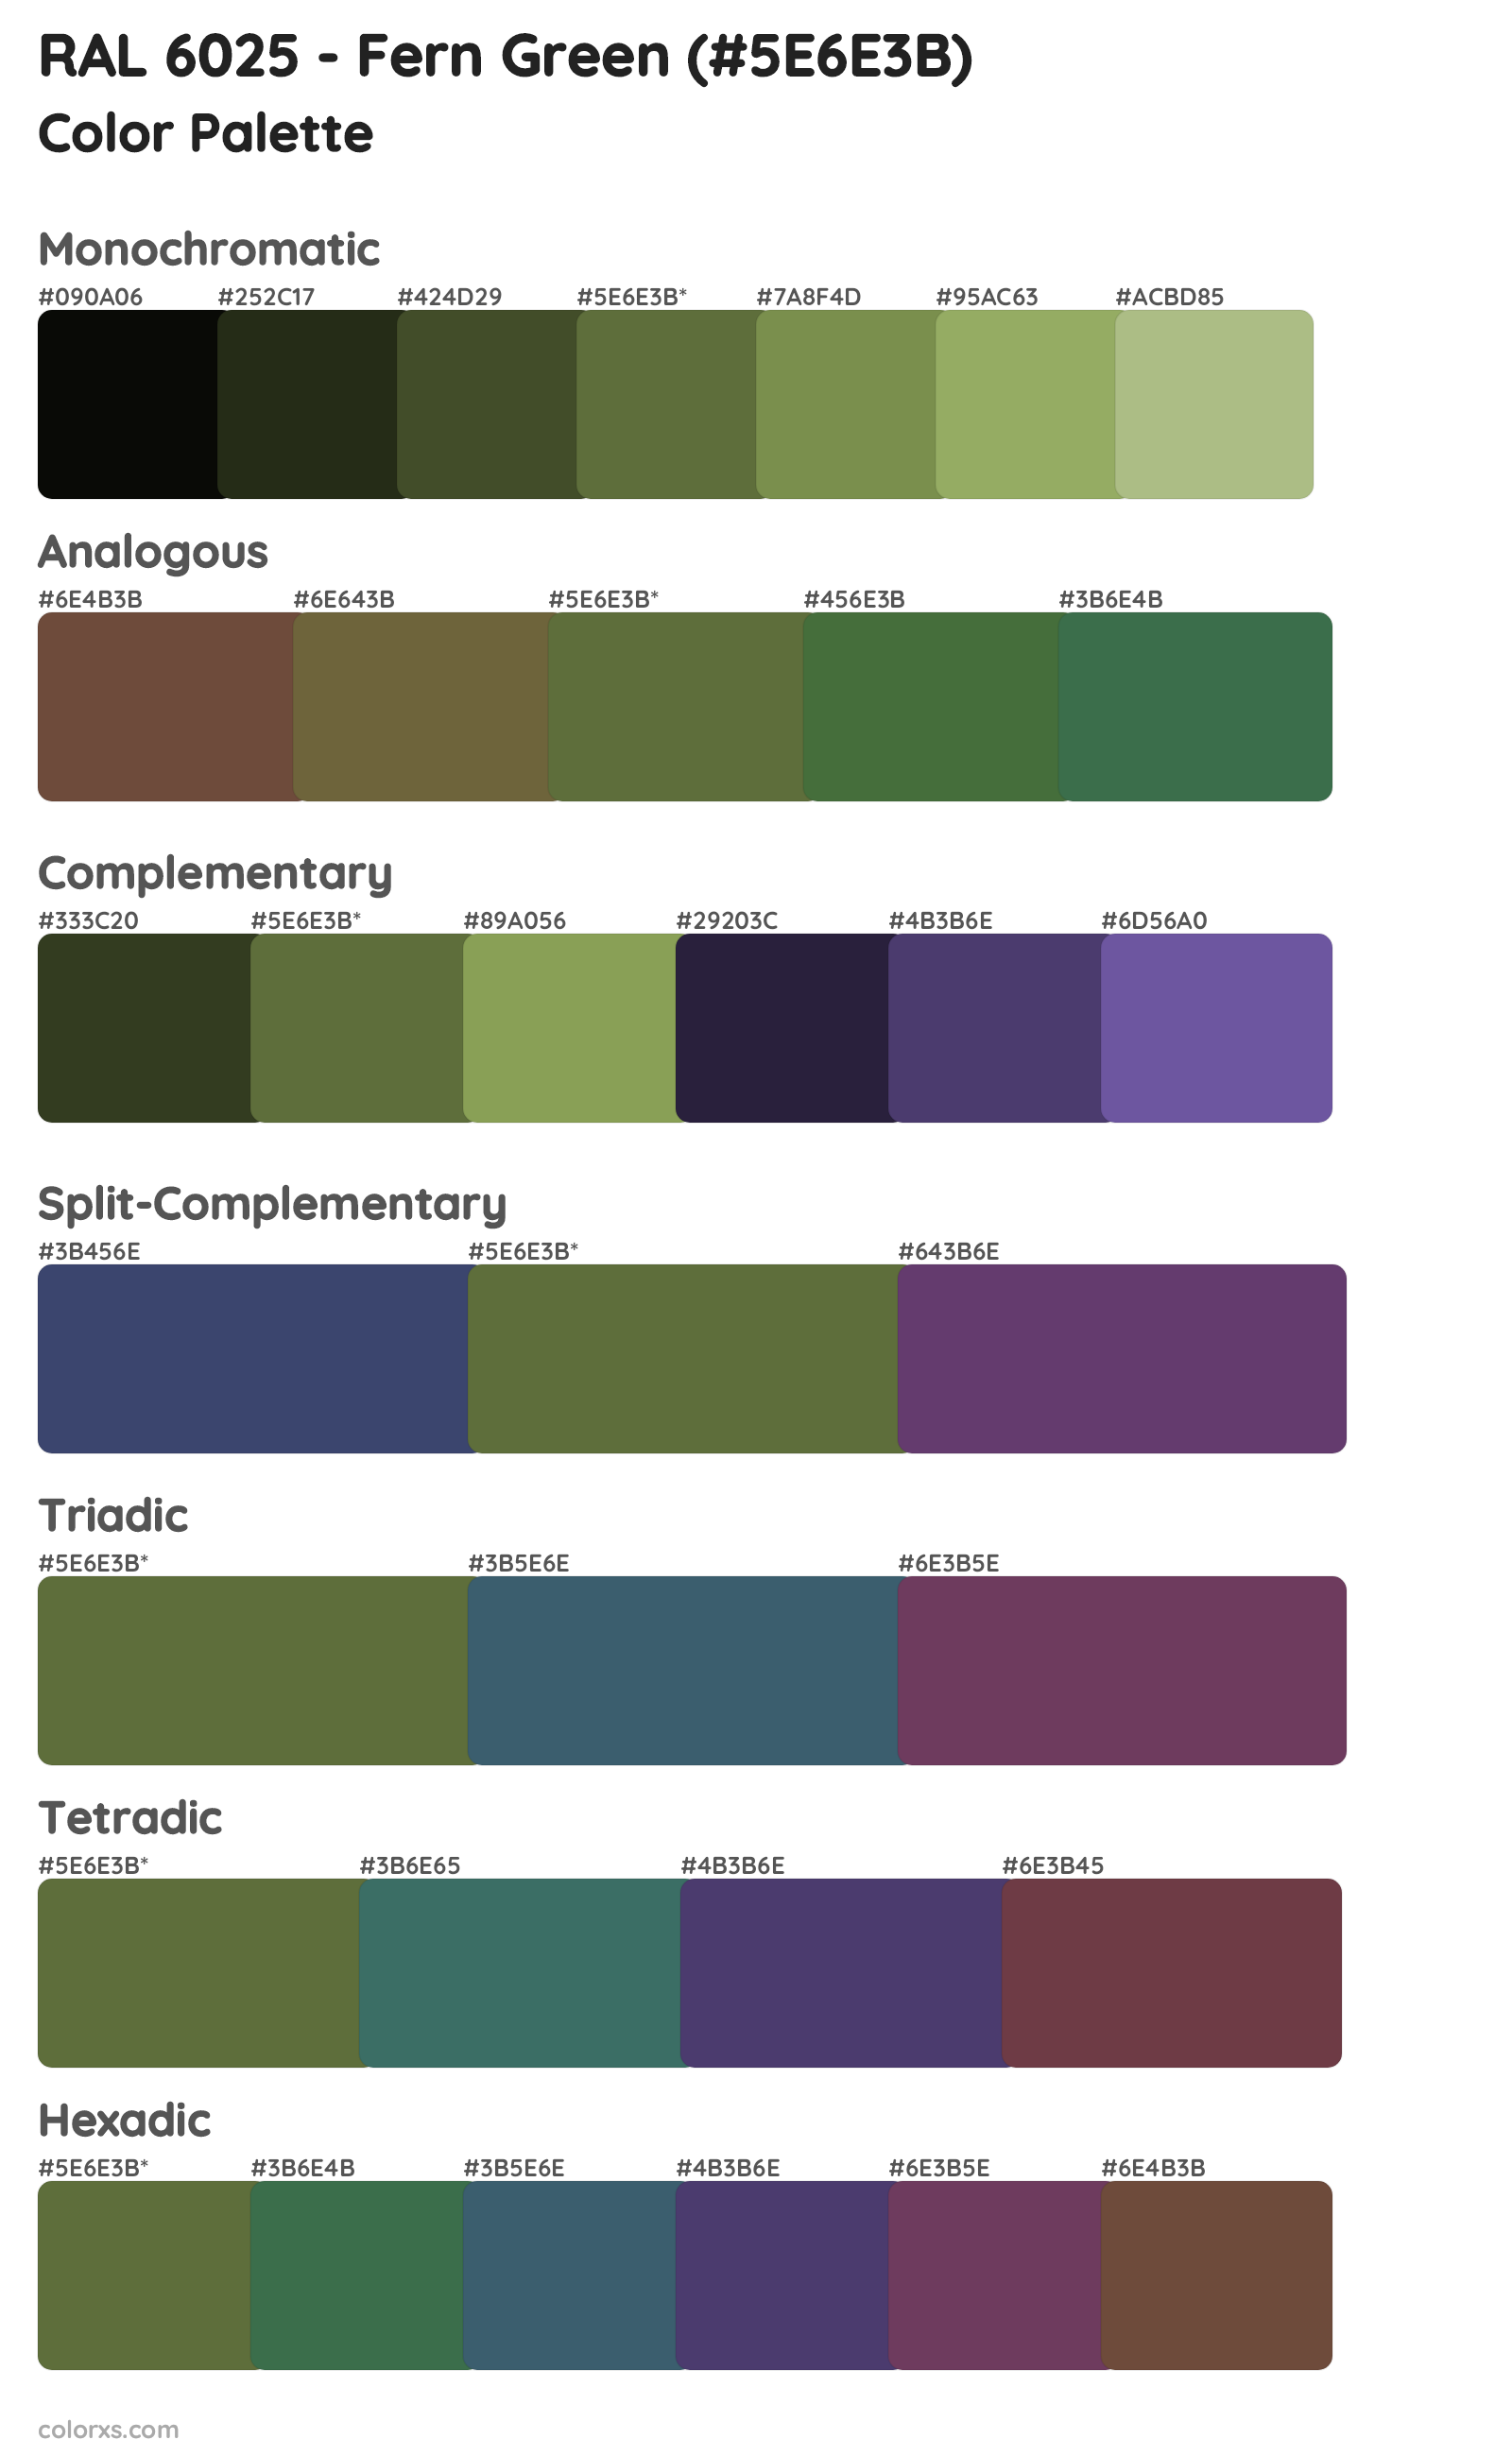 RAL 6025 - Fern Green Color Scheme Palettes